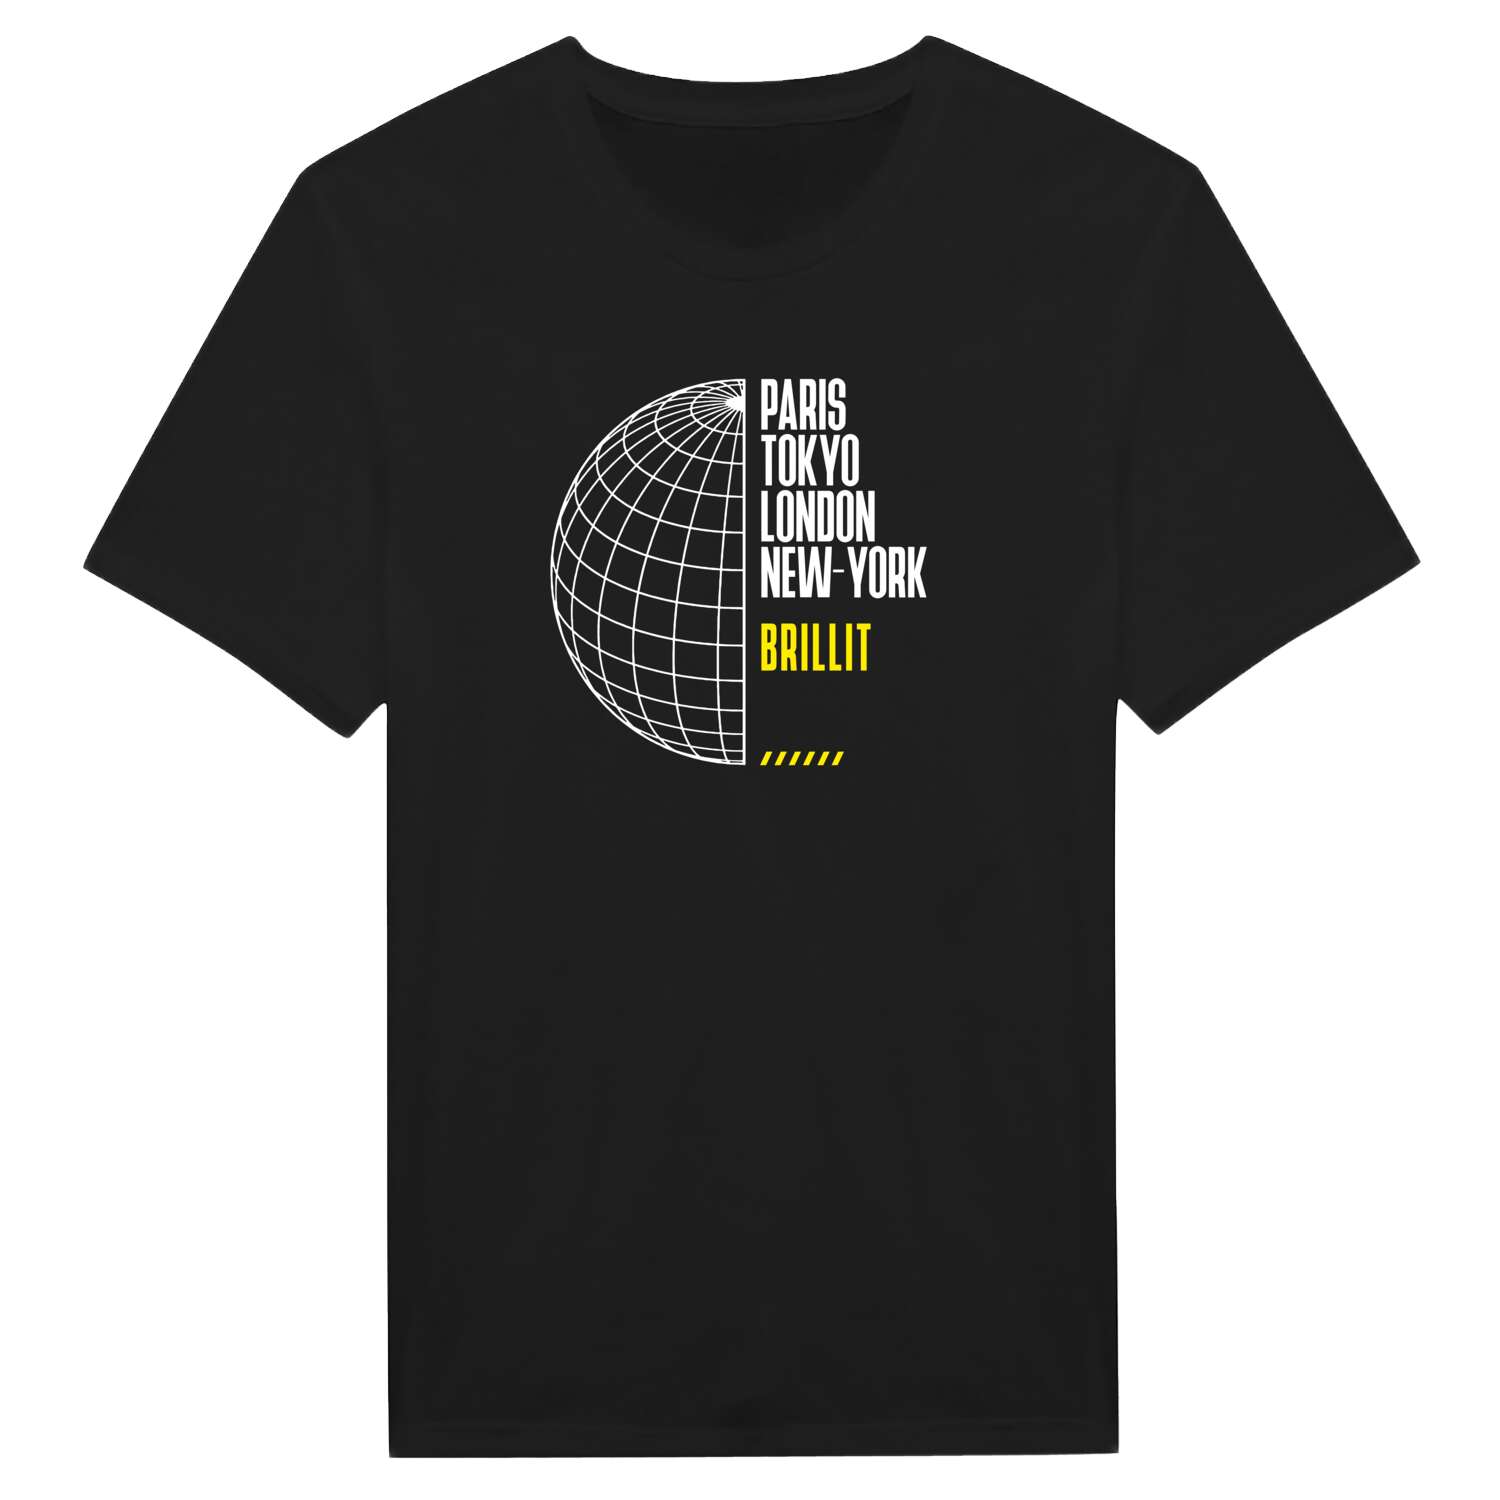 Brillit T-Shirt »Paris Tokyo London«